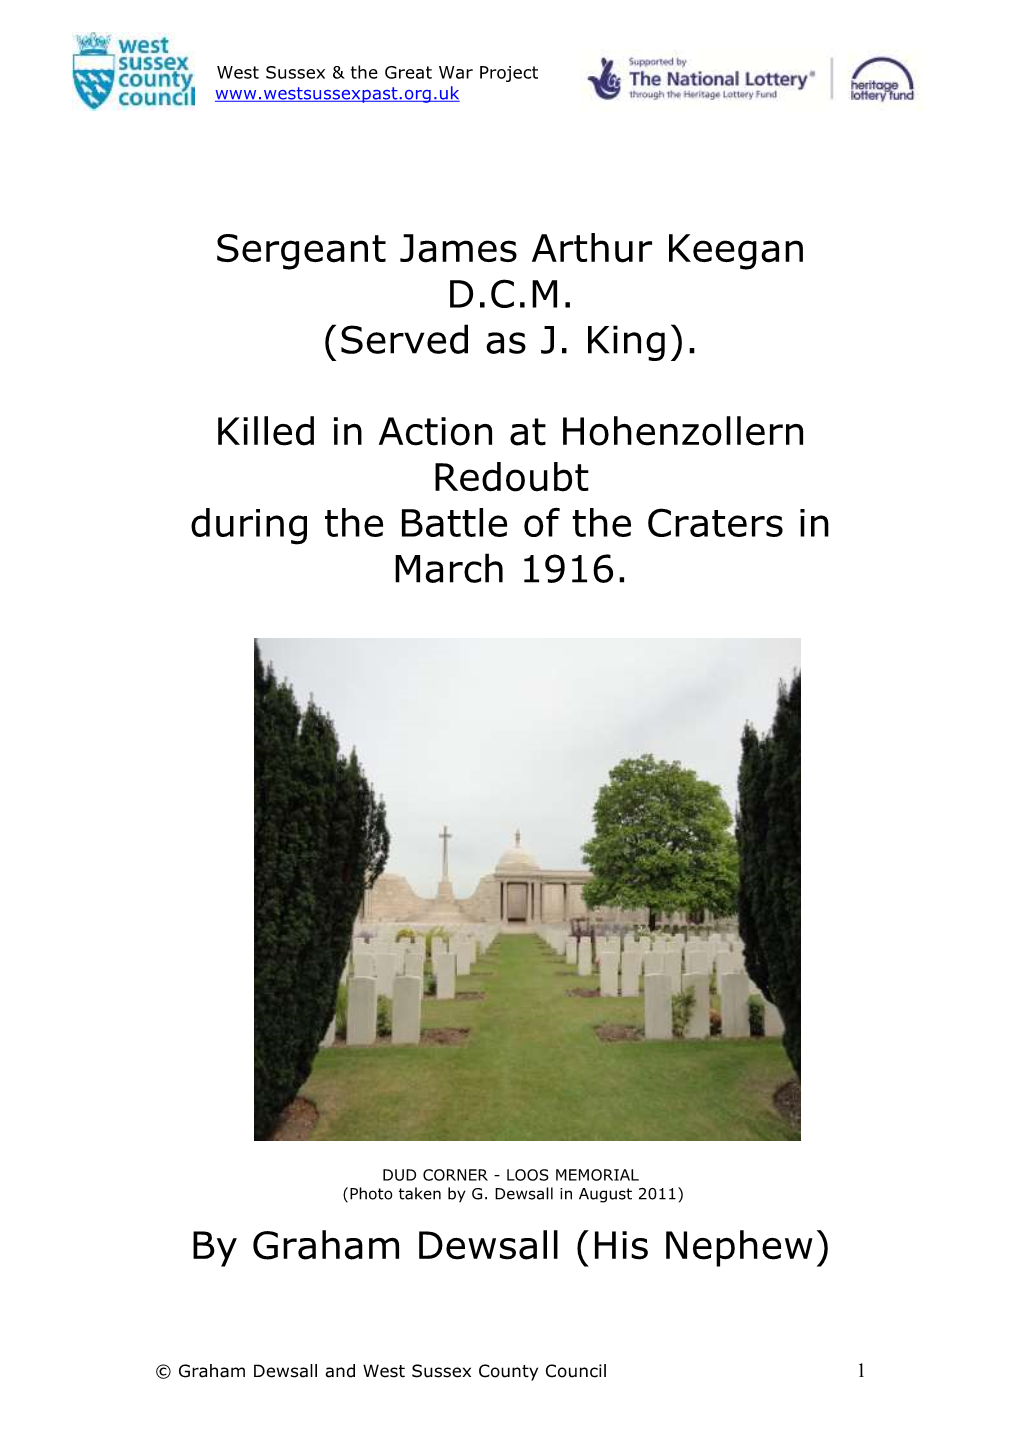 Sergeant James Keegan DCM